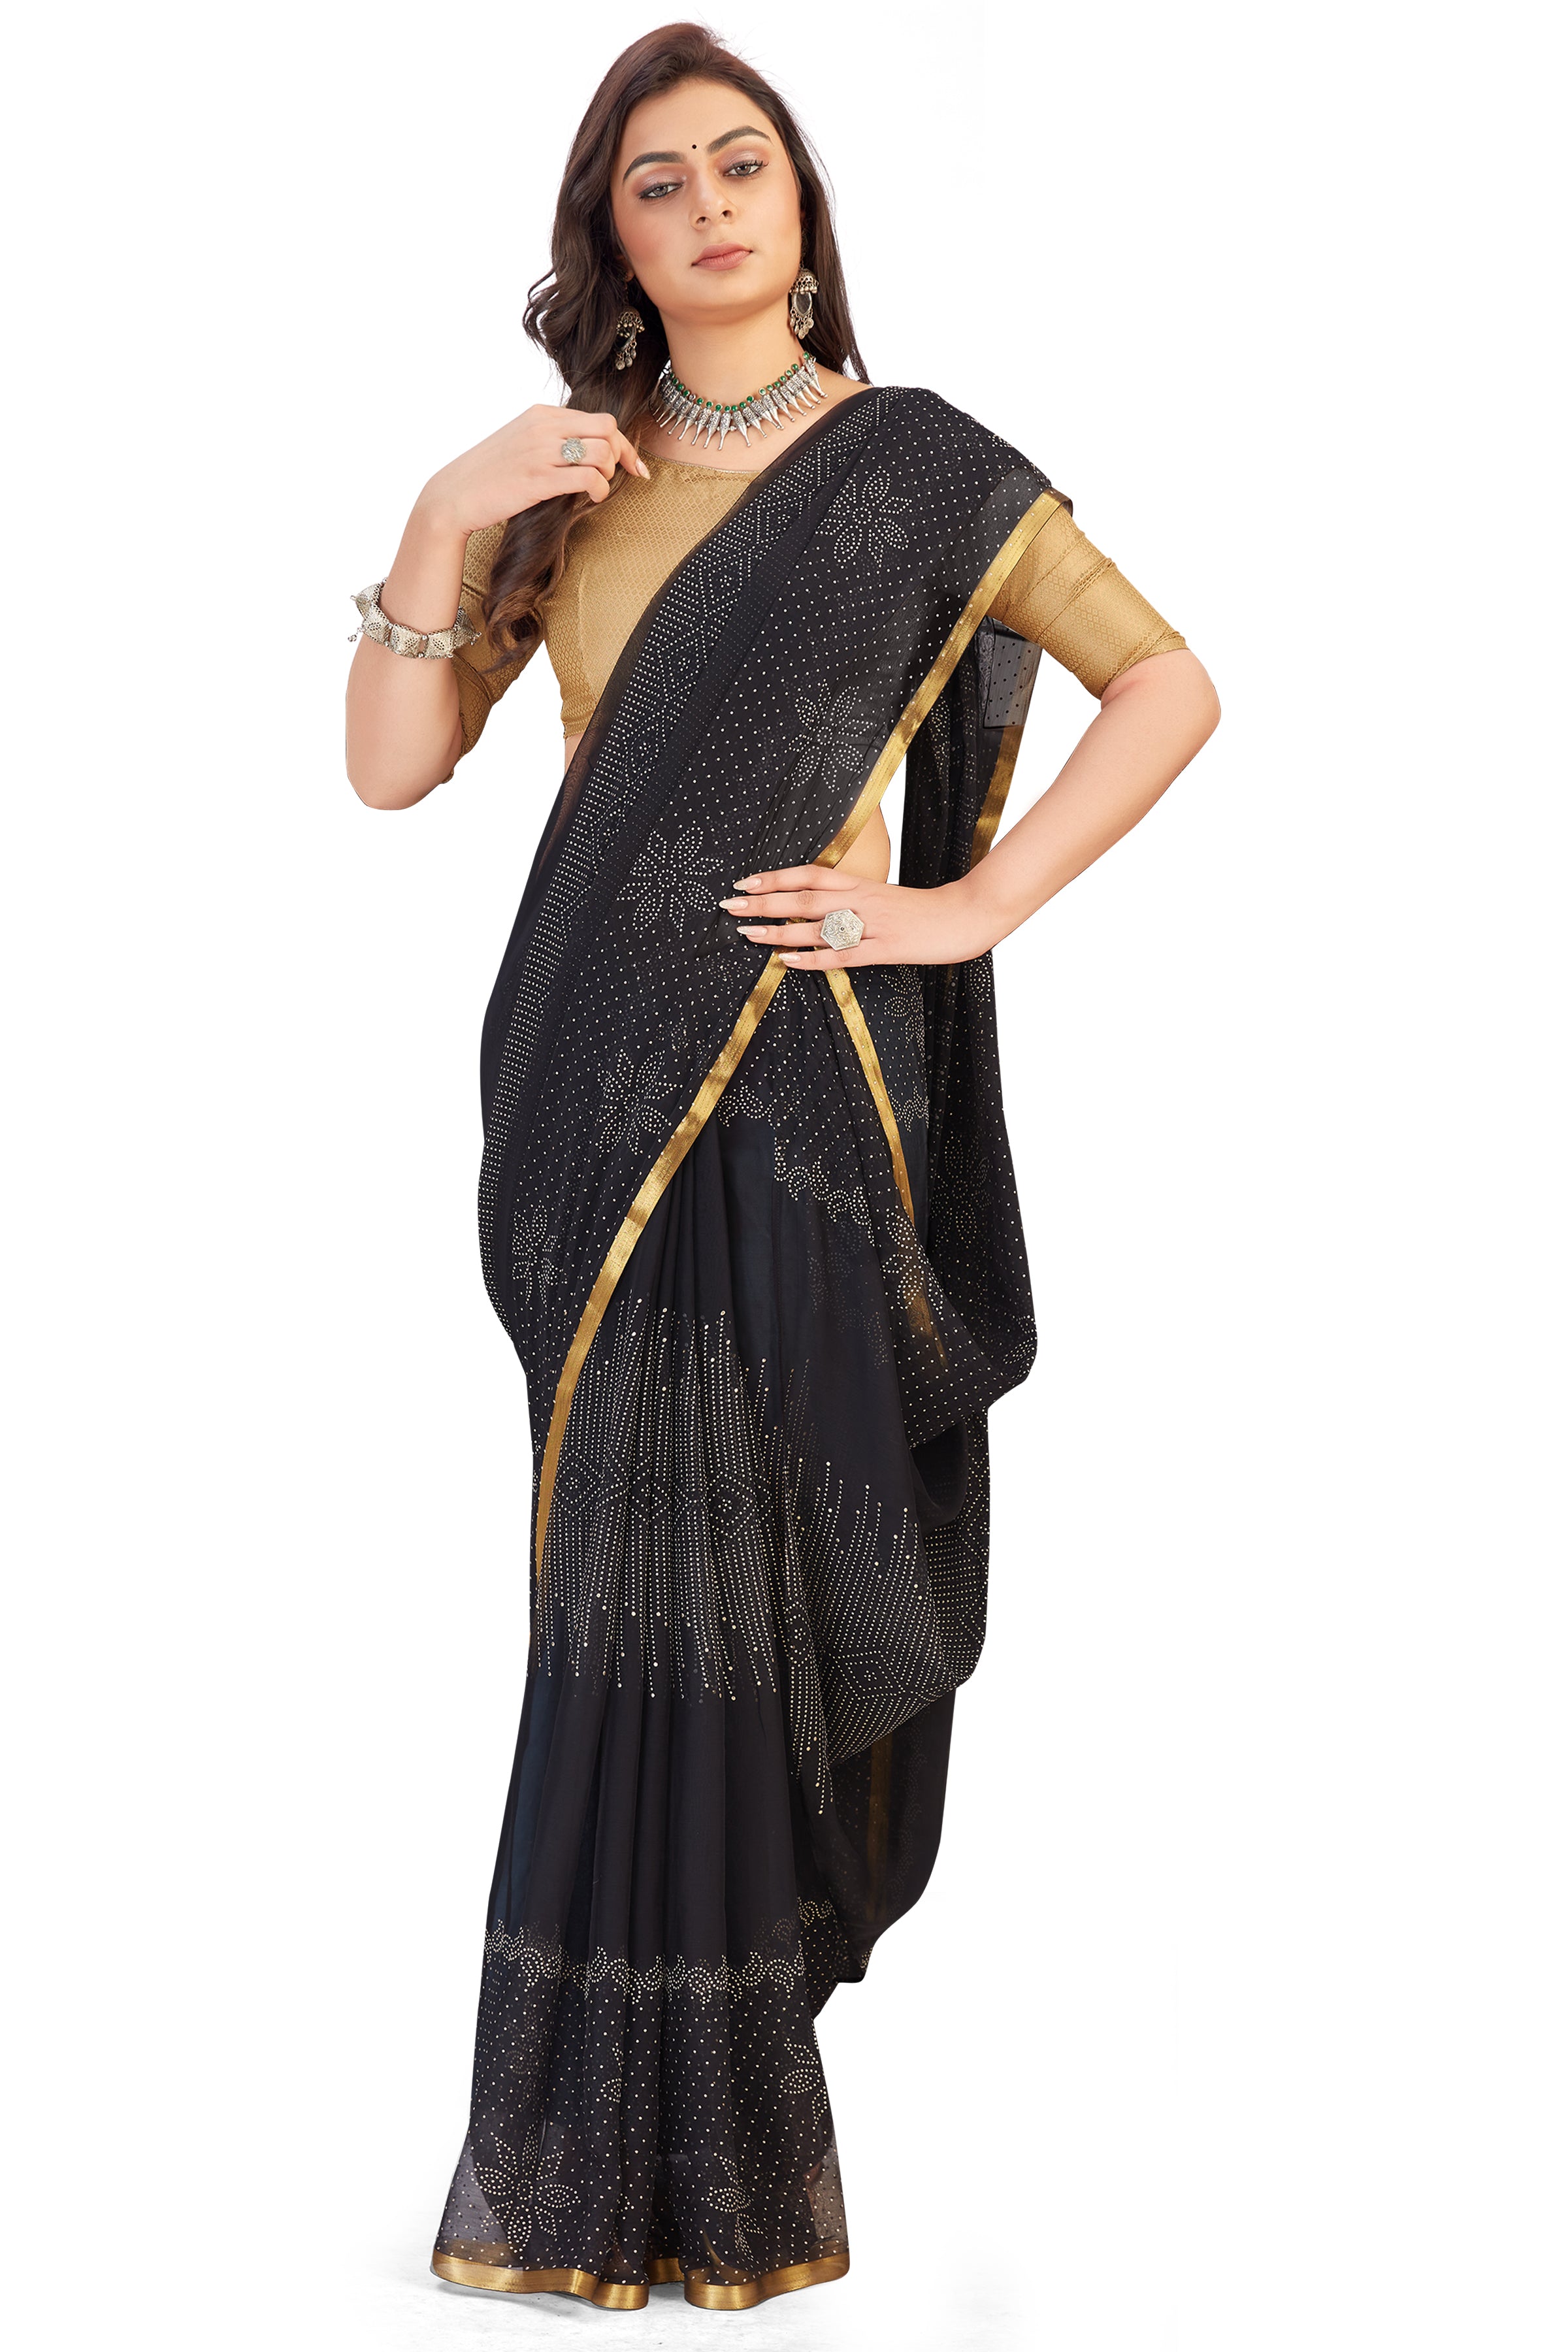 Women's Bandhani Daily Wear Chiffon Sari With Blouse Piece (Black) - NIMIDHYA